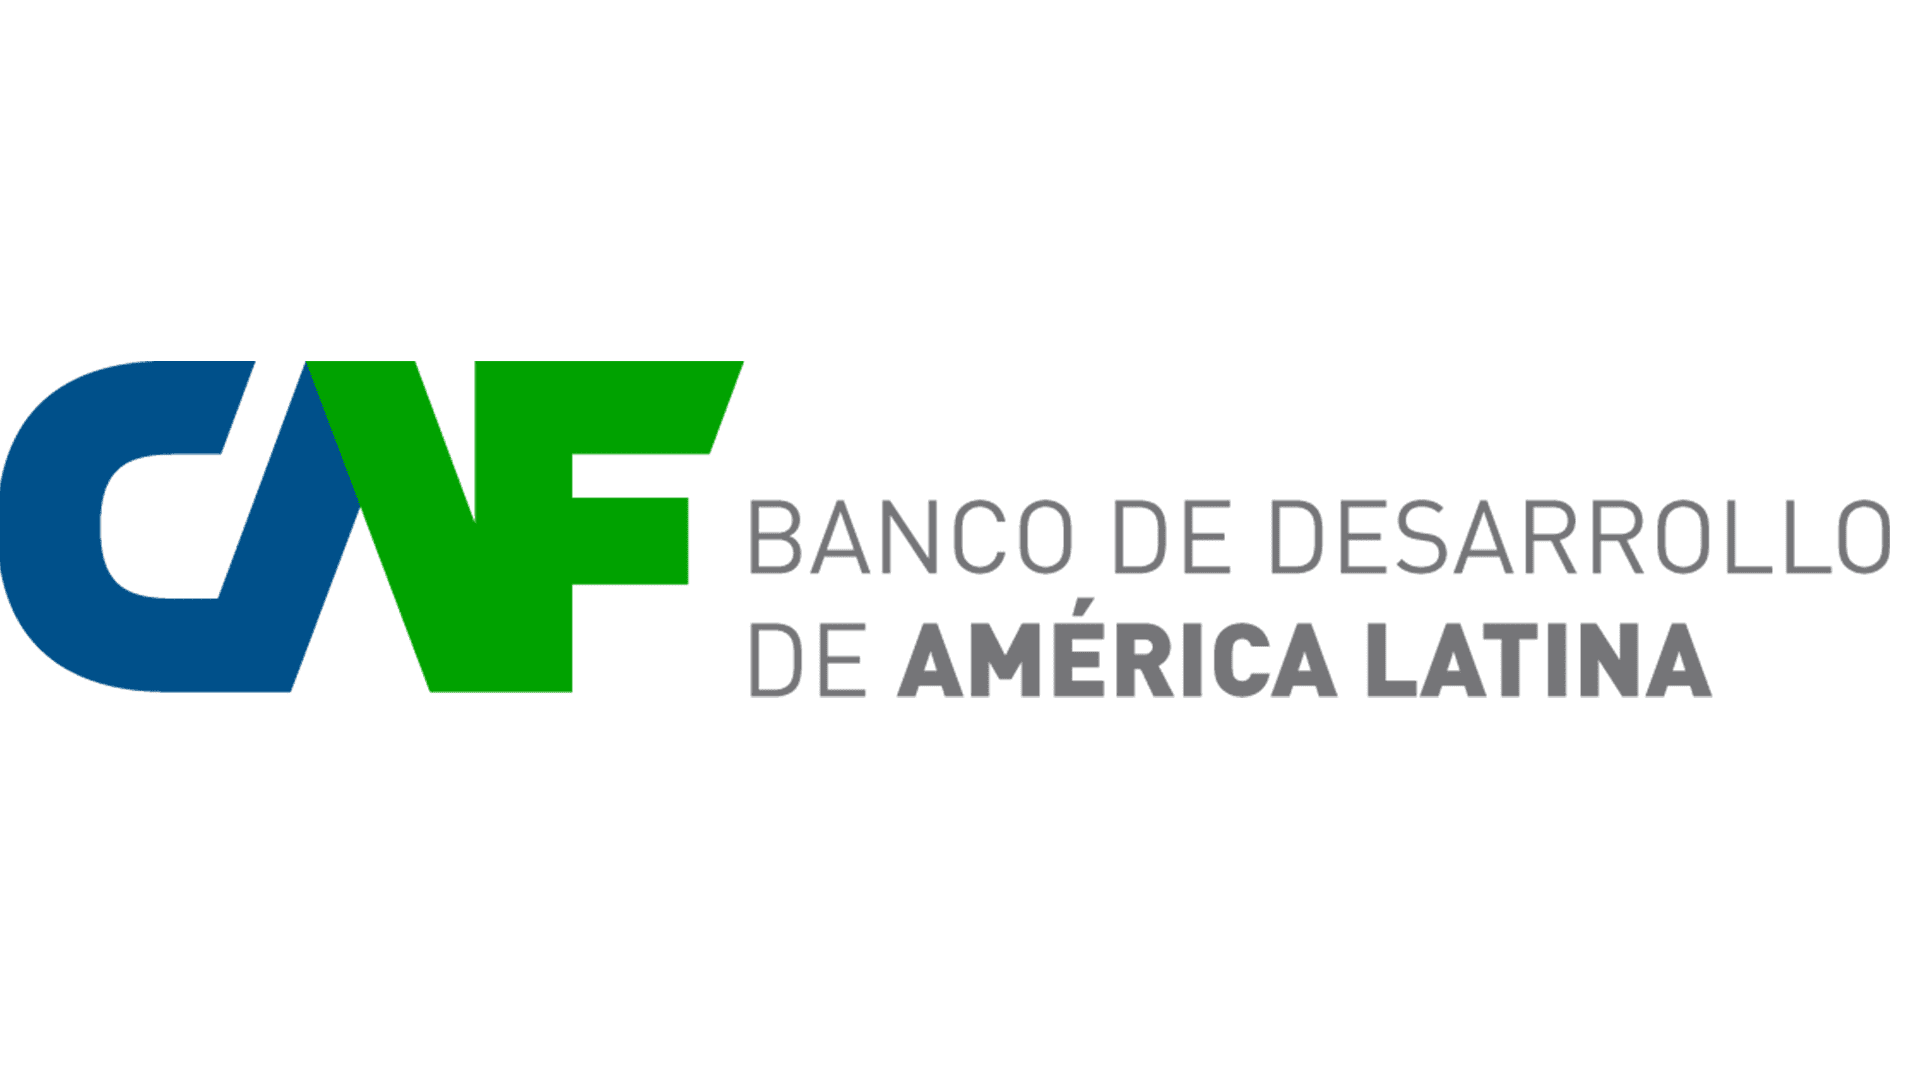 Development Bank of Latin America's logo